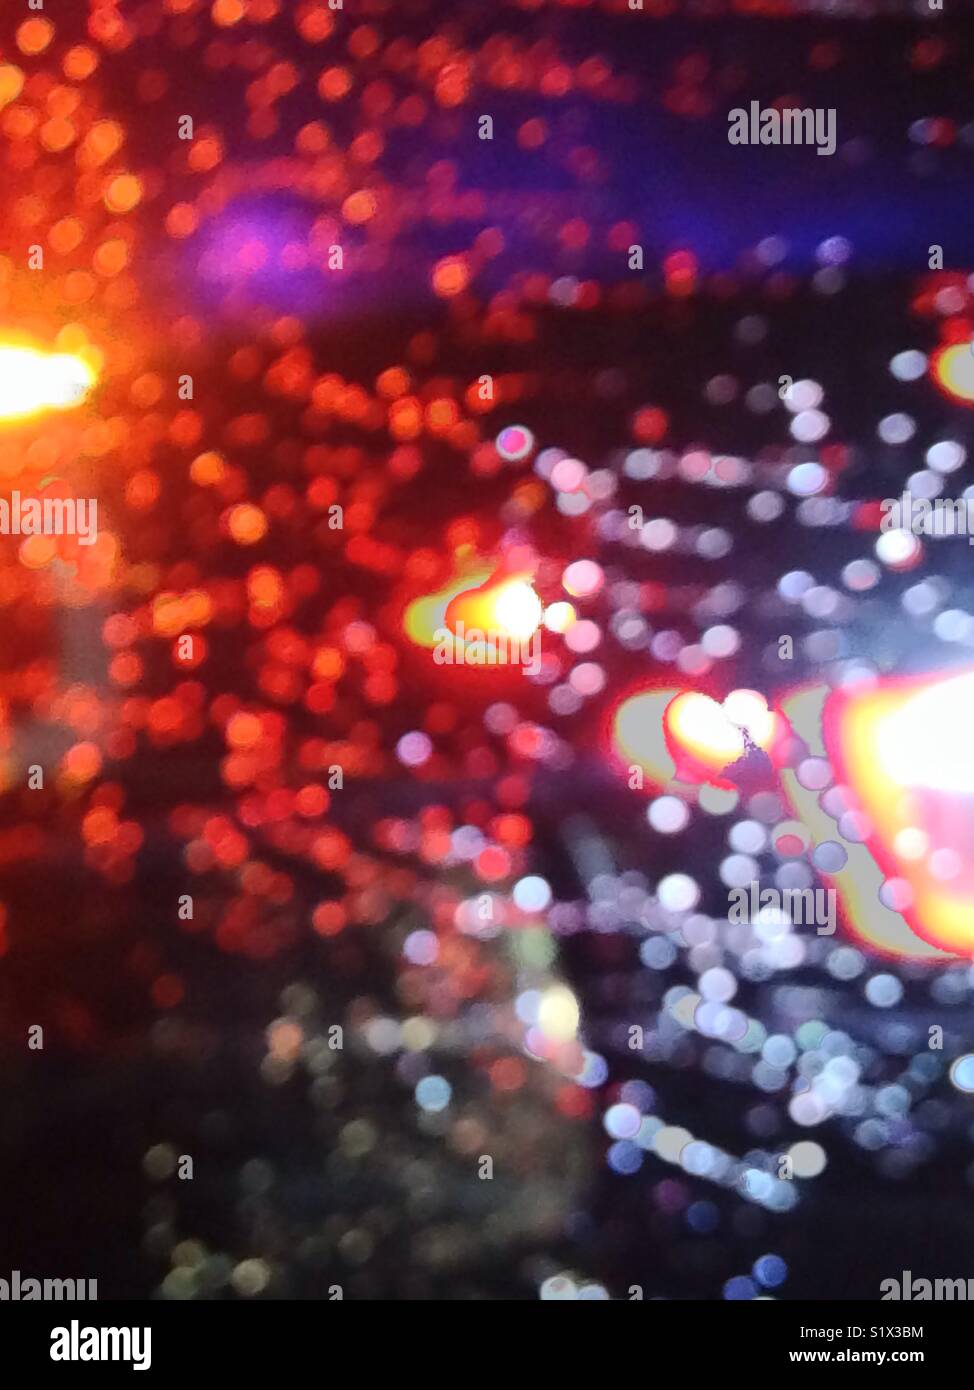 Emergency vehicle flashing lights through a rainy car window. Abstract effect. Stock Photo